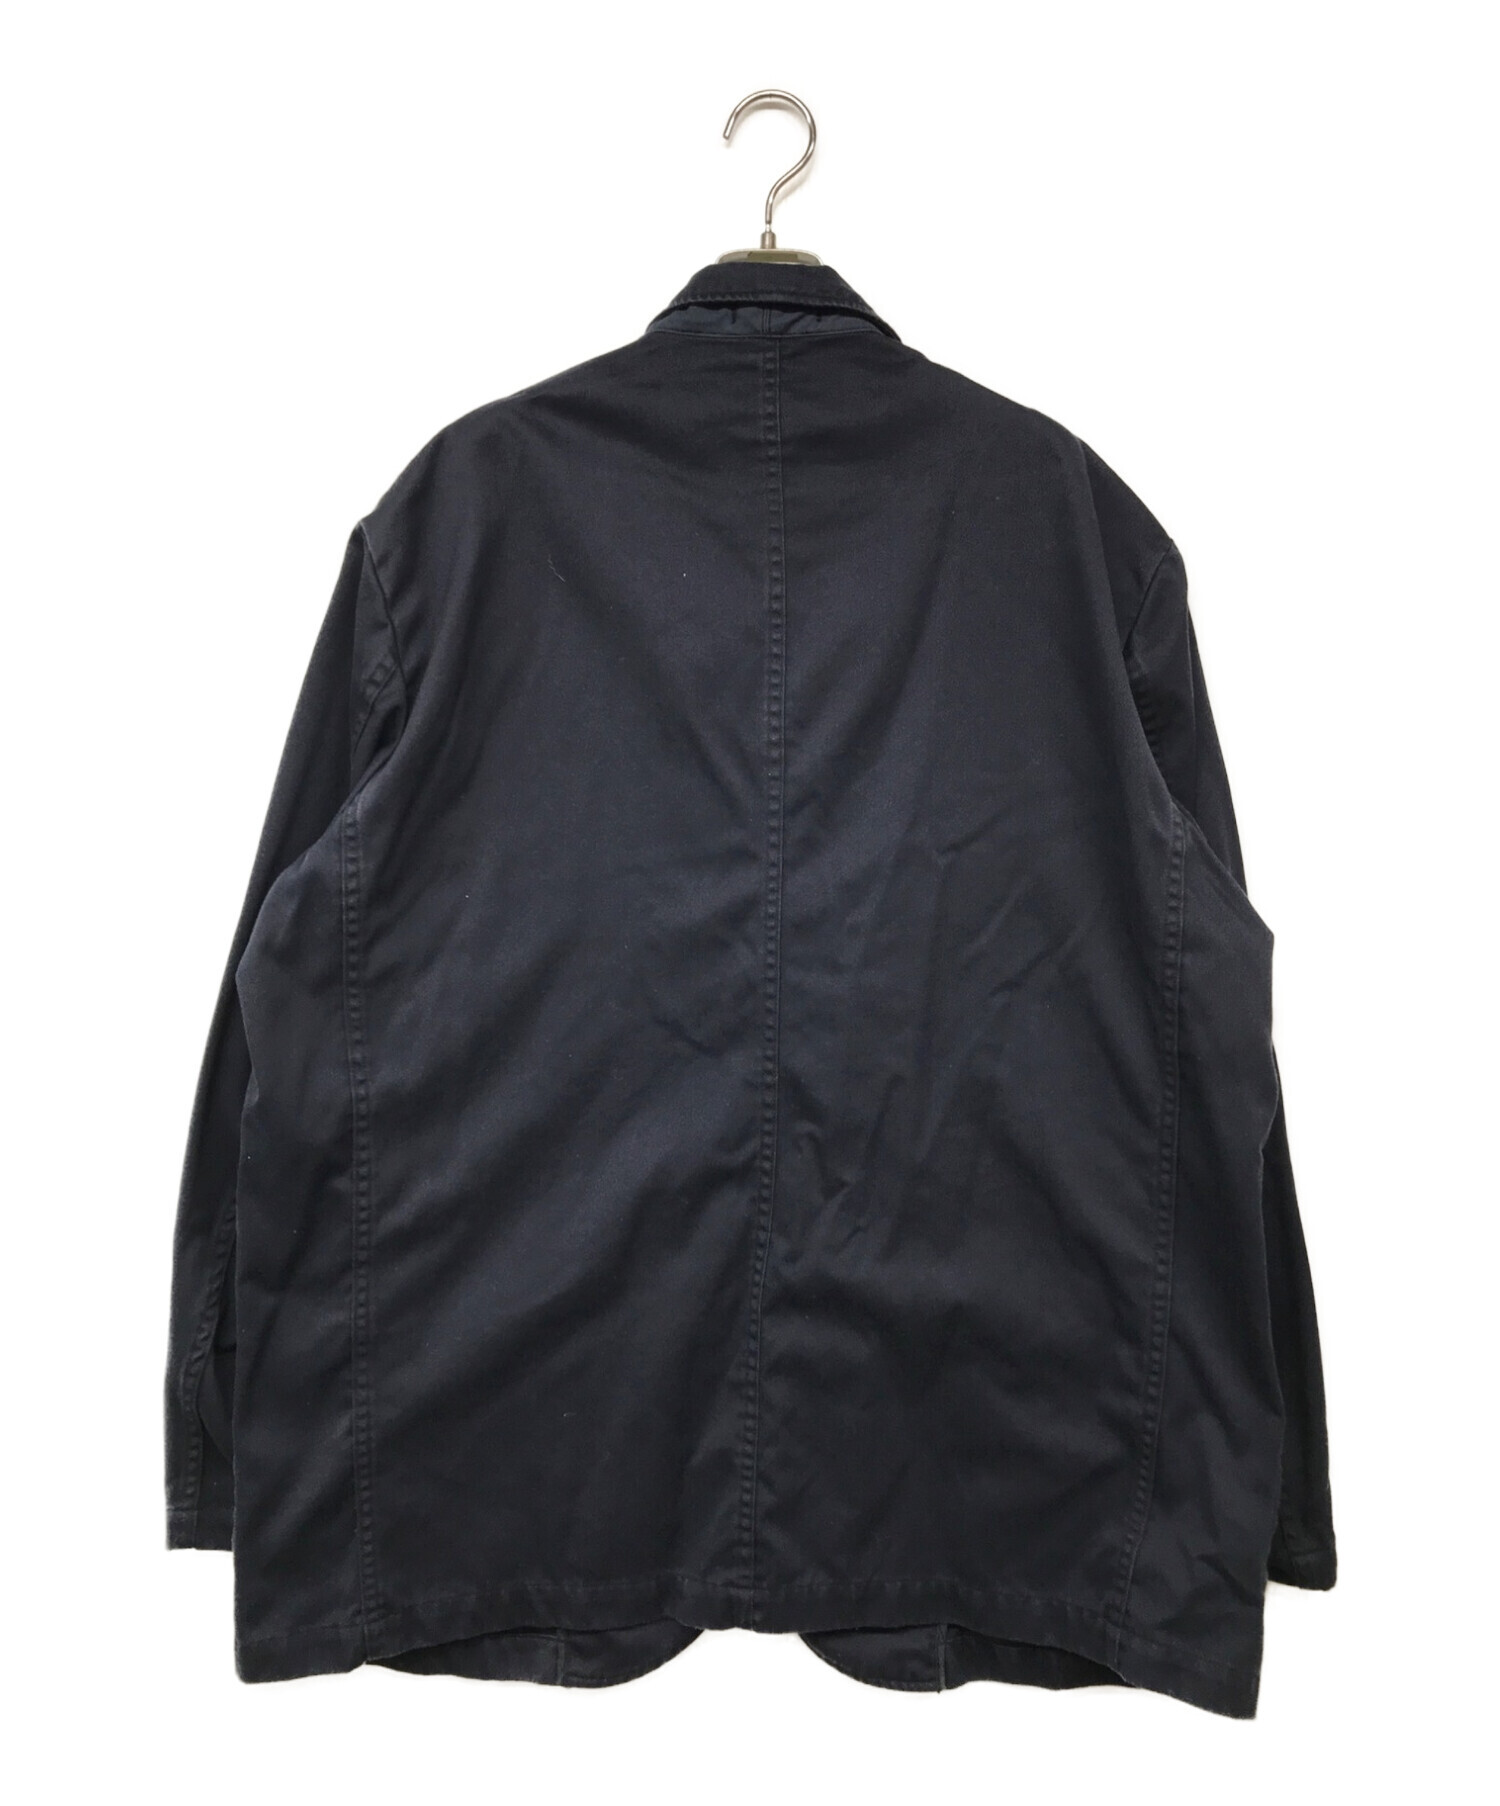 nanamica (ナナミカ) A.H (エーエイチ) Big Chino Club Jacket/ビッグチノクラブジャケット ネイビー サイズ:L